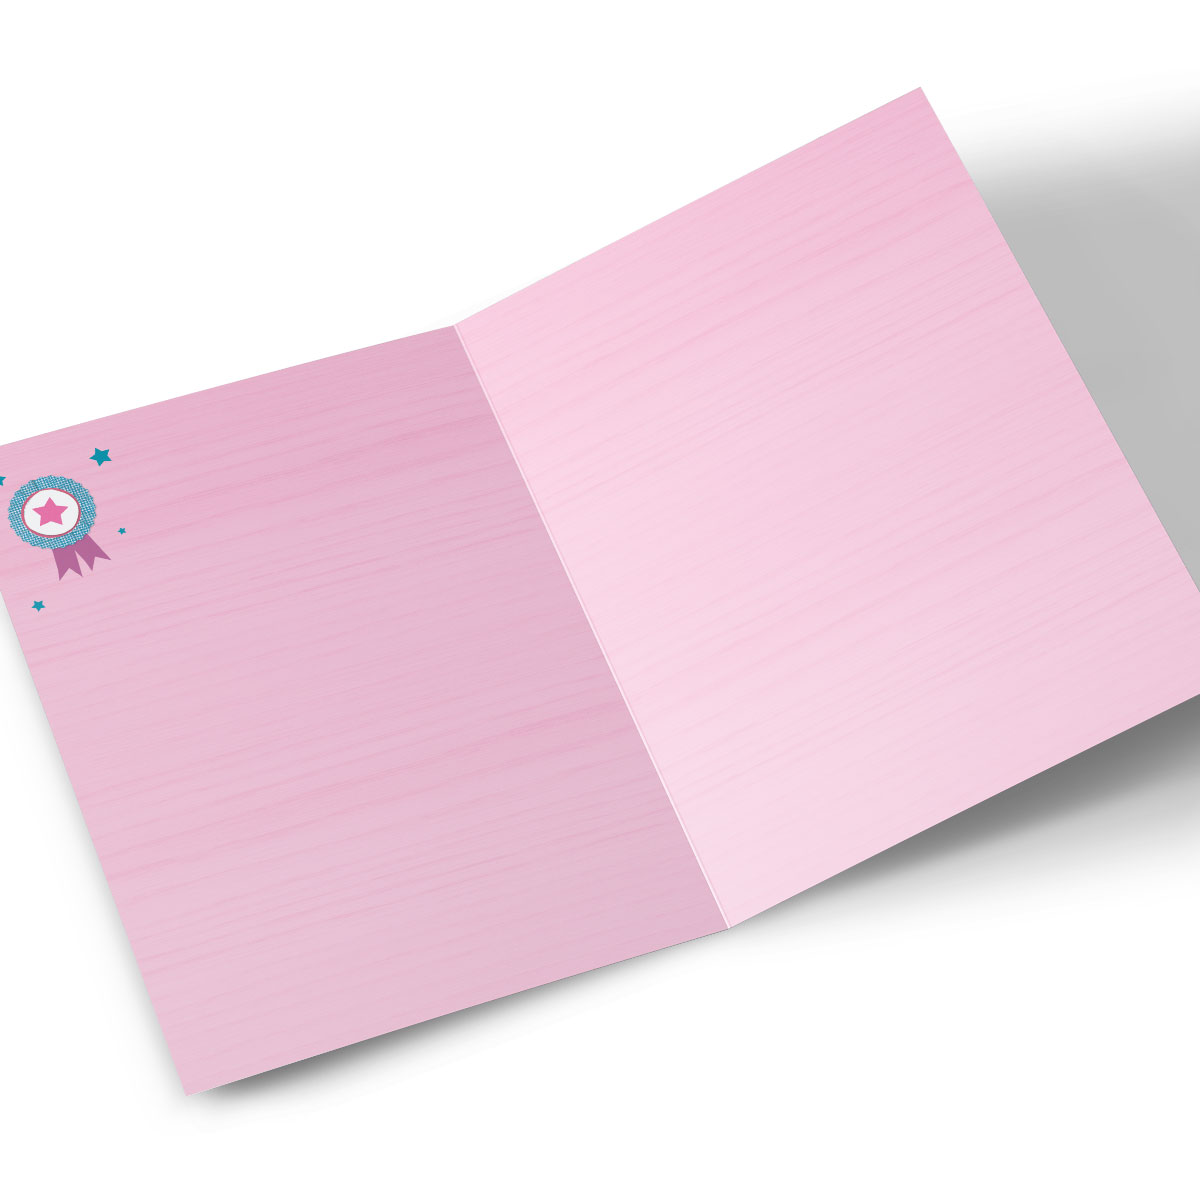 Photo Birthday Card - Pink Polaroids, Sister